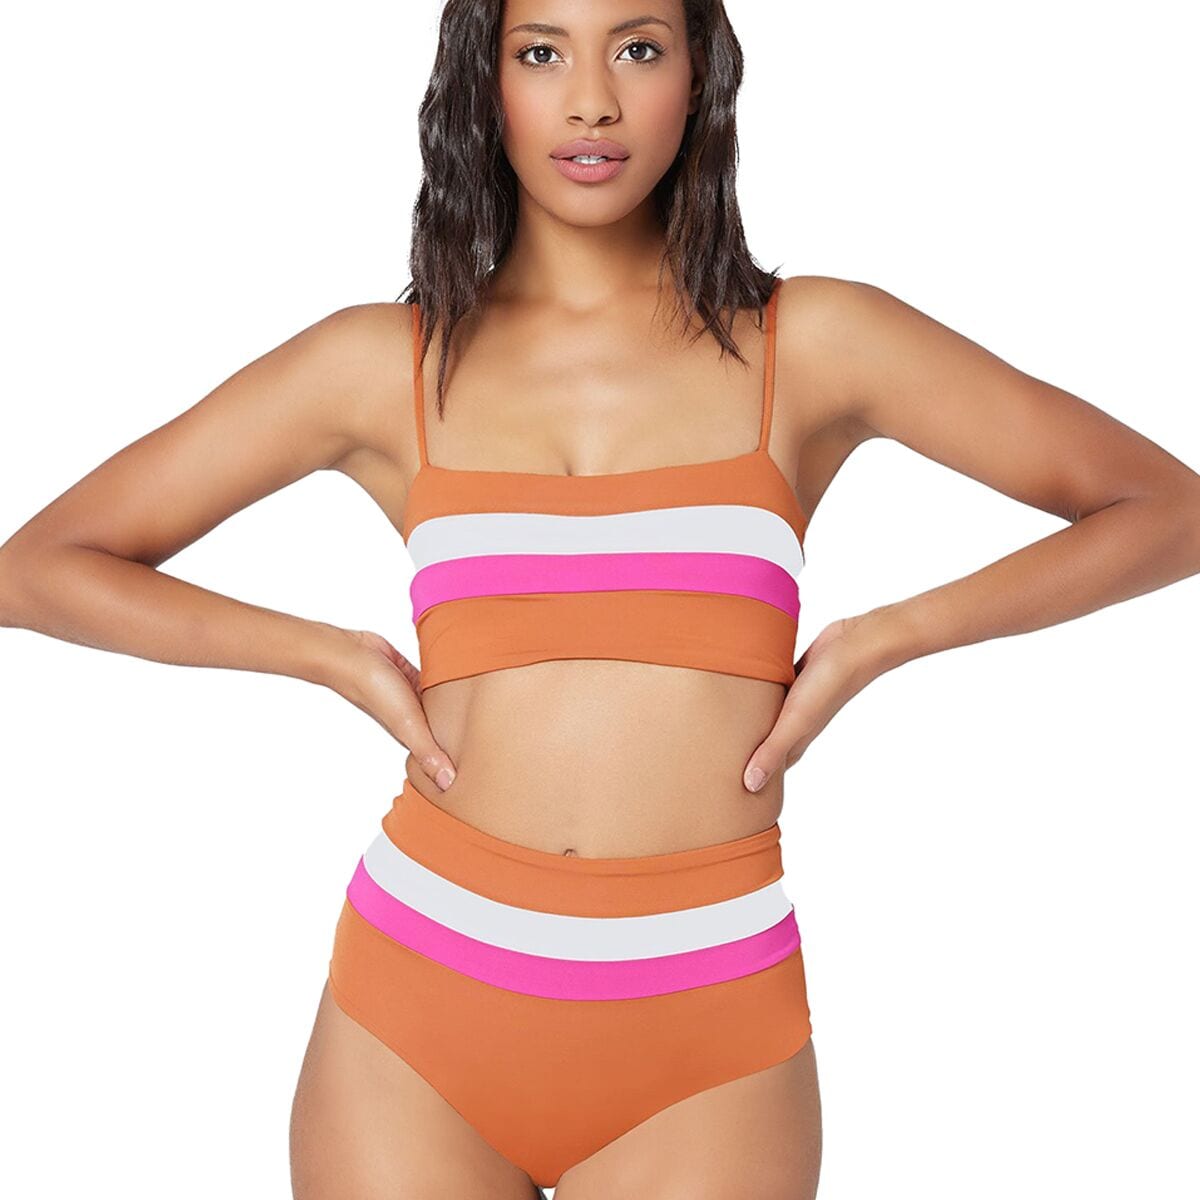 L Space Rebel Stripe Bikini Top - Women's Amber/Bougainvillea/Cream L